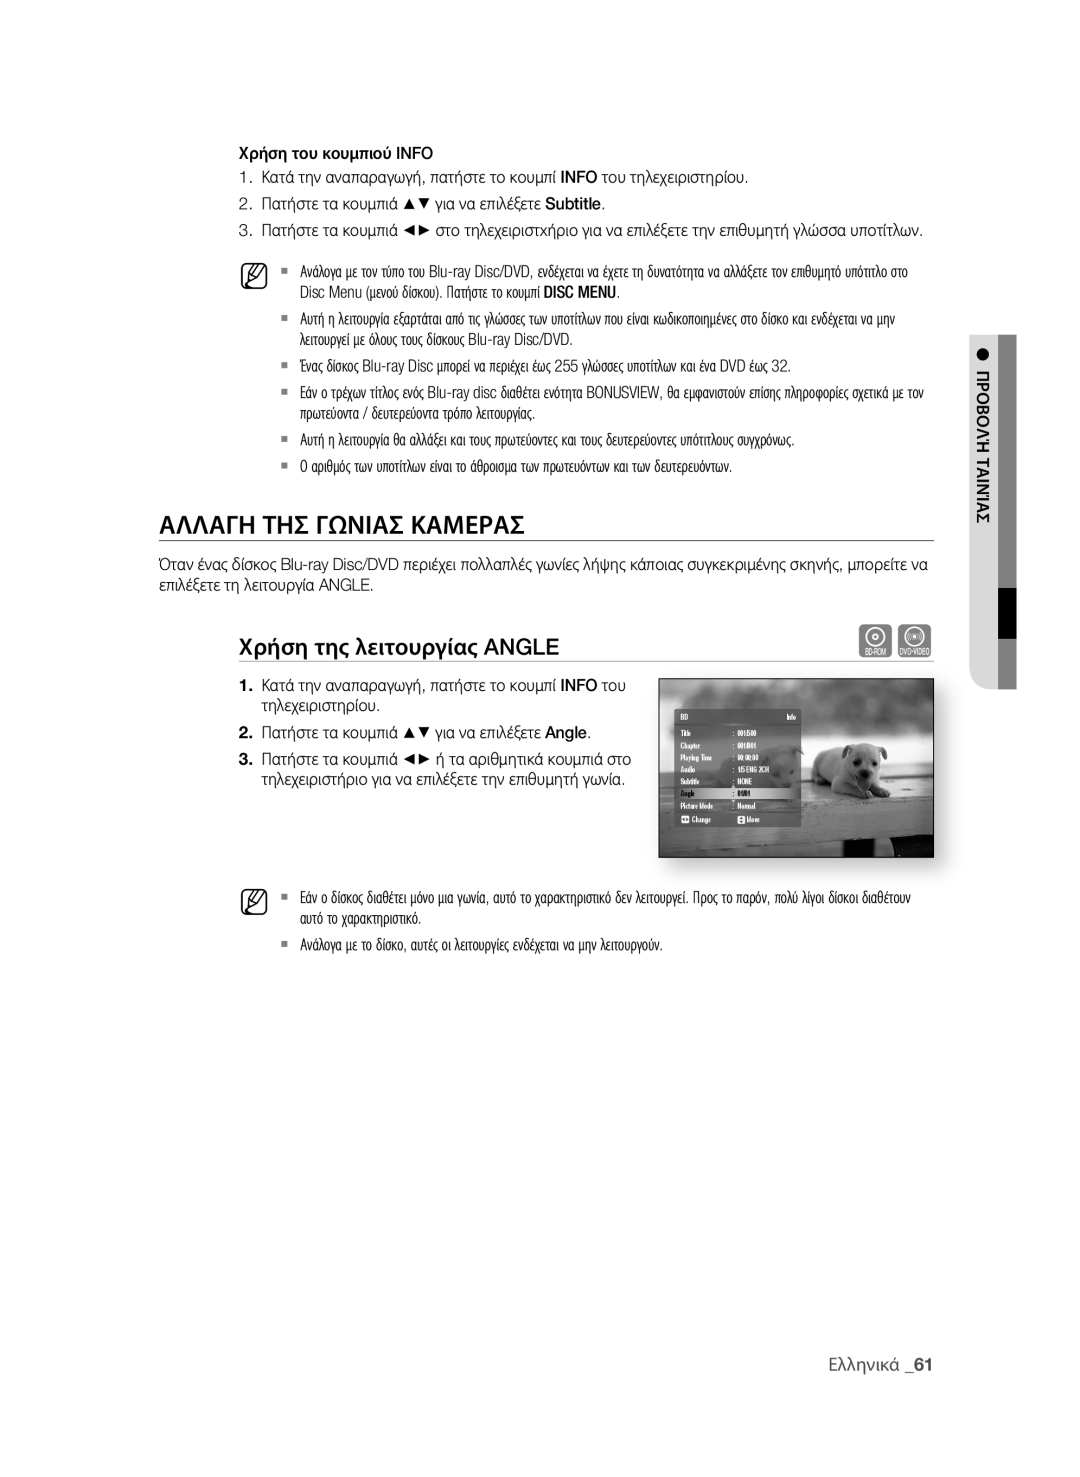 Samsung BD-P1580/EDC manual ΑΛΛΑΓη Τησ ΓΩΝιΑσ ΚΑΜερΑσ, Χρήση της λειτουργίας ANGLE, Ελληνικά 1 